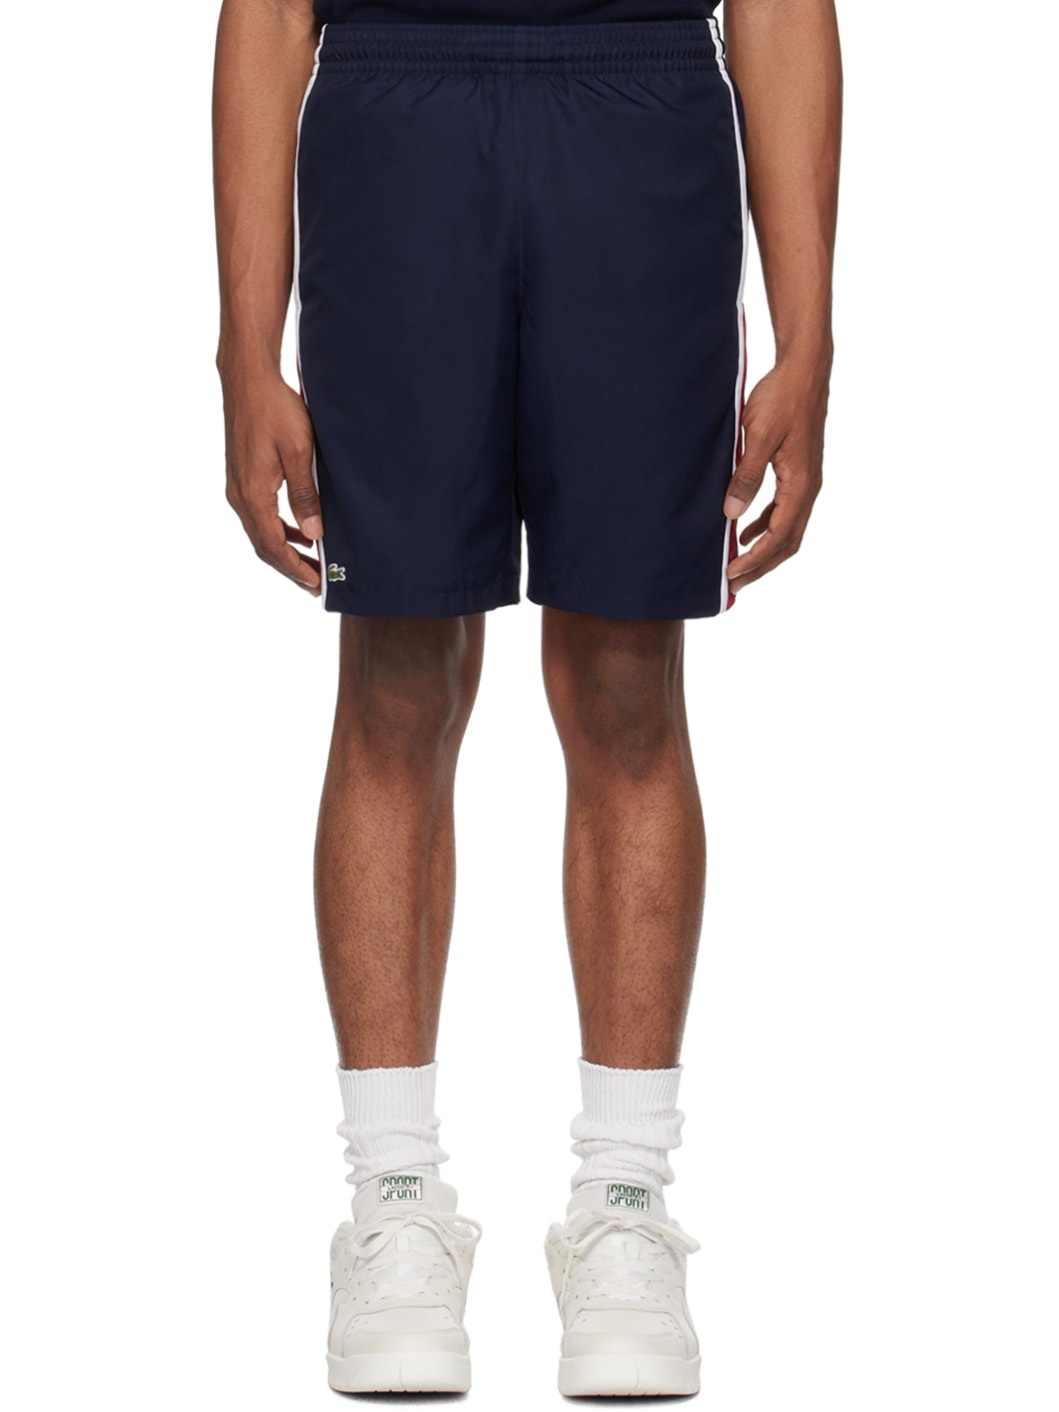 Navy Colorblock Shorts - 1